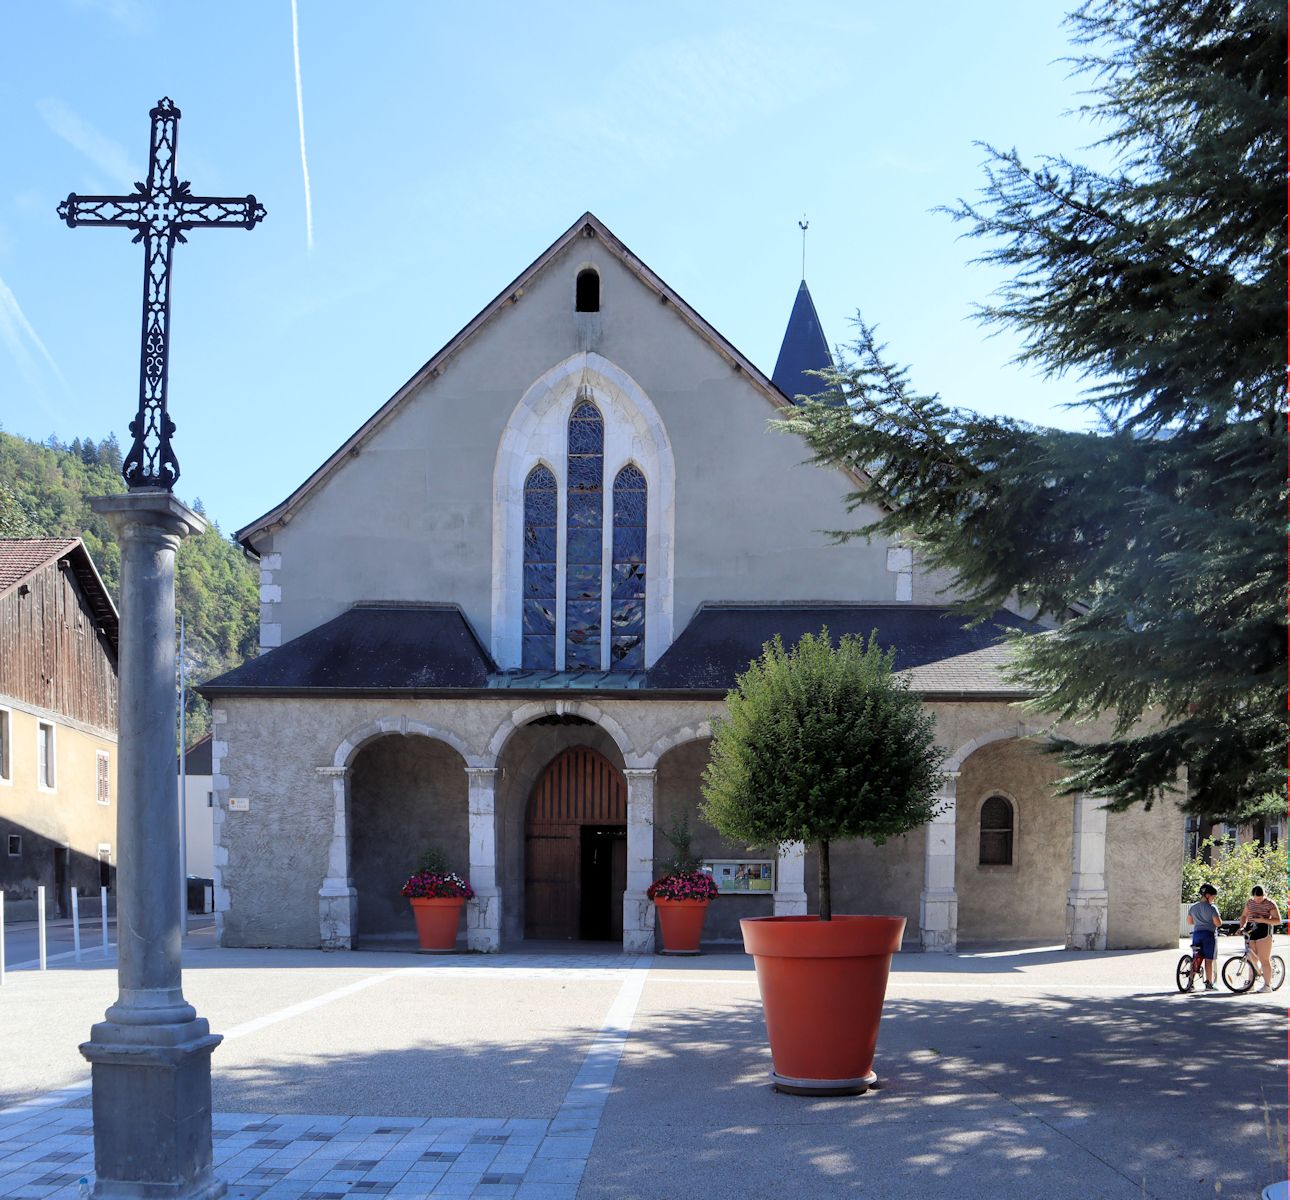 ehemalige Franziskanerkirche, heute Pfarrkirche in Cluses